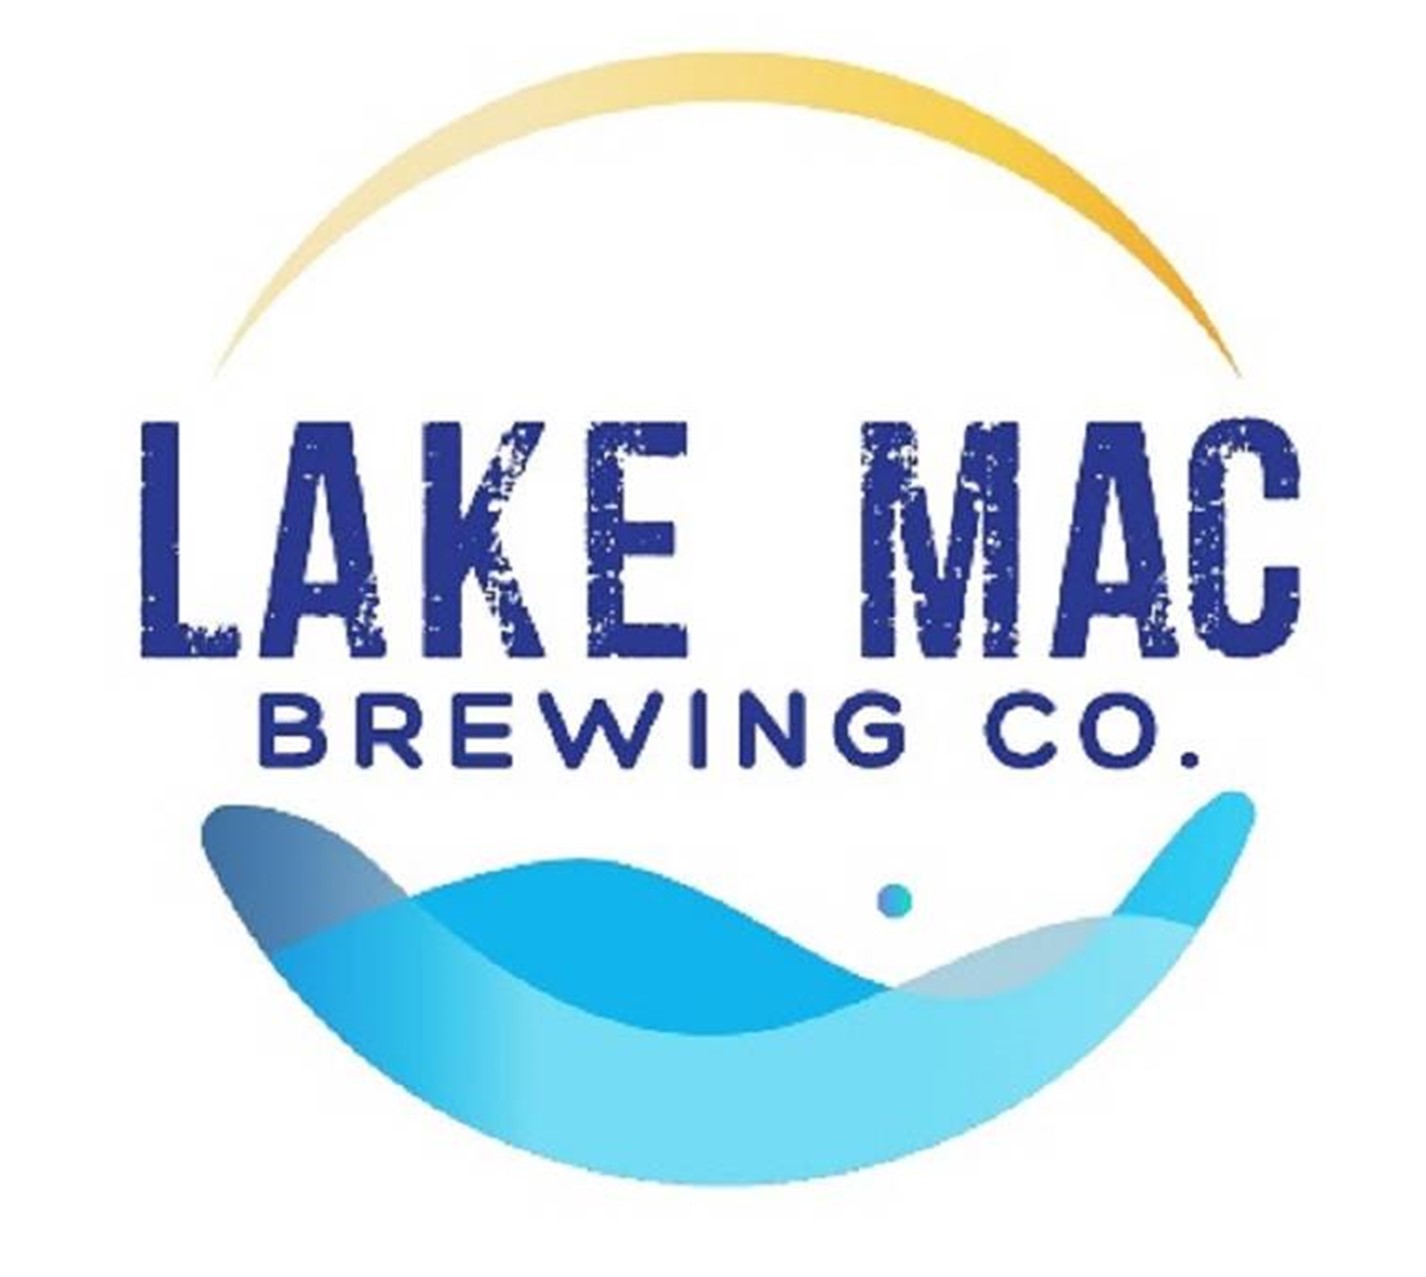 Lake Mac Brewing Co.